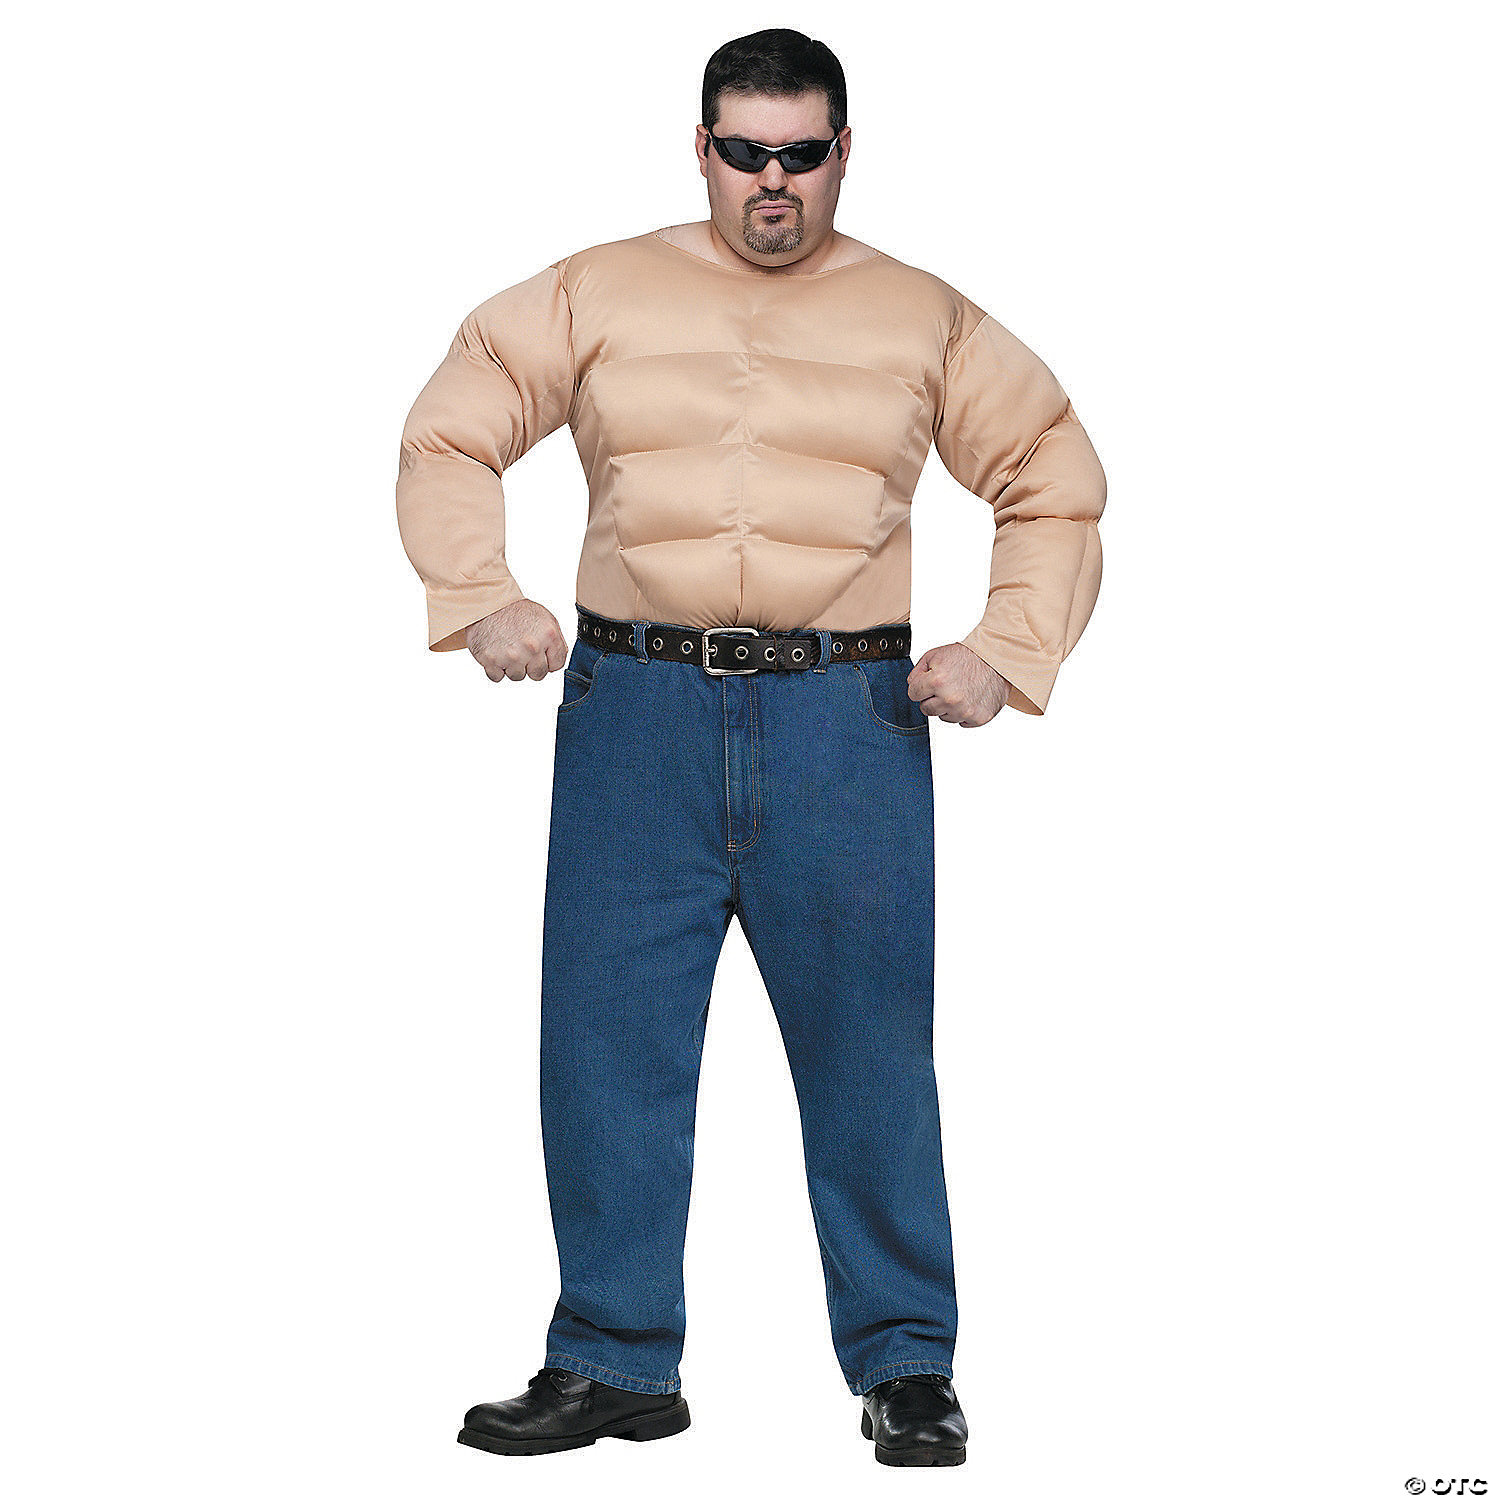 Fun World/Holiday Times Men's Muscle Man Shirt Plus Size Costume - Standard